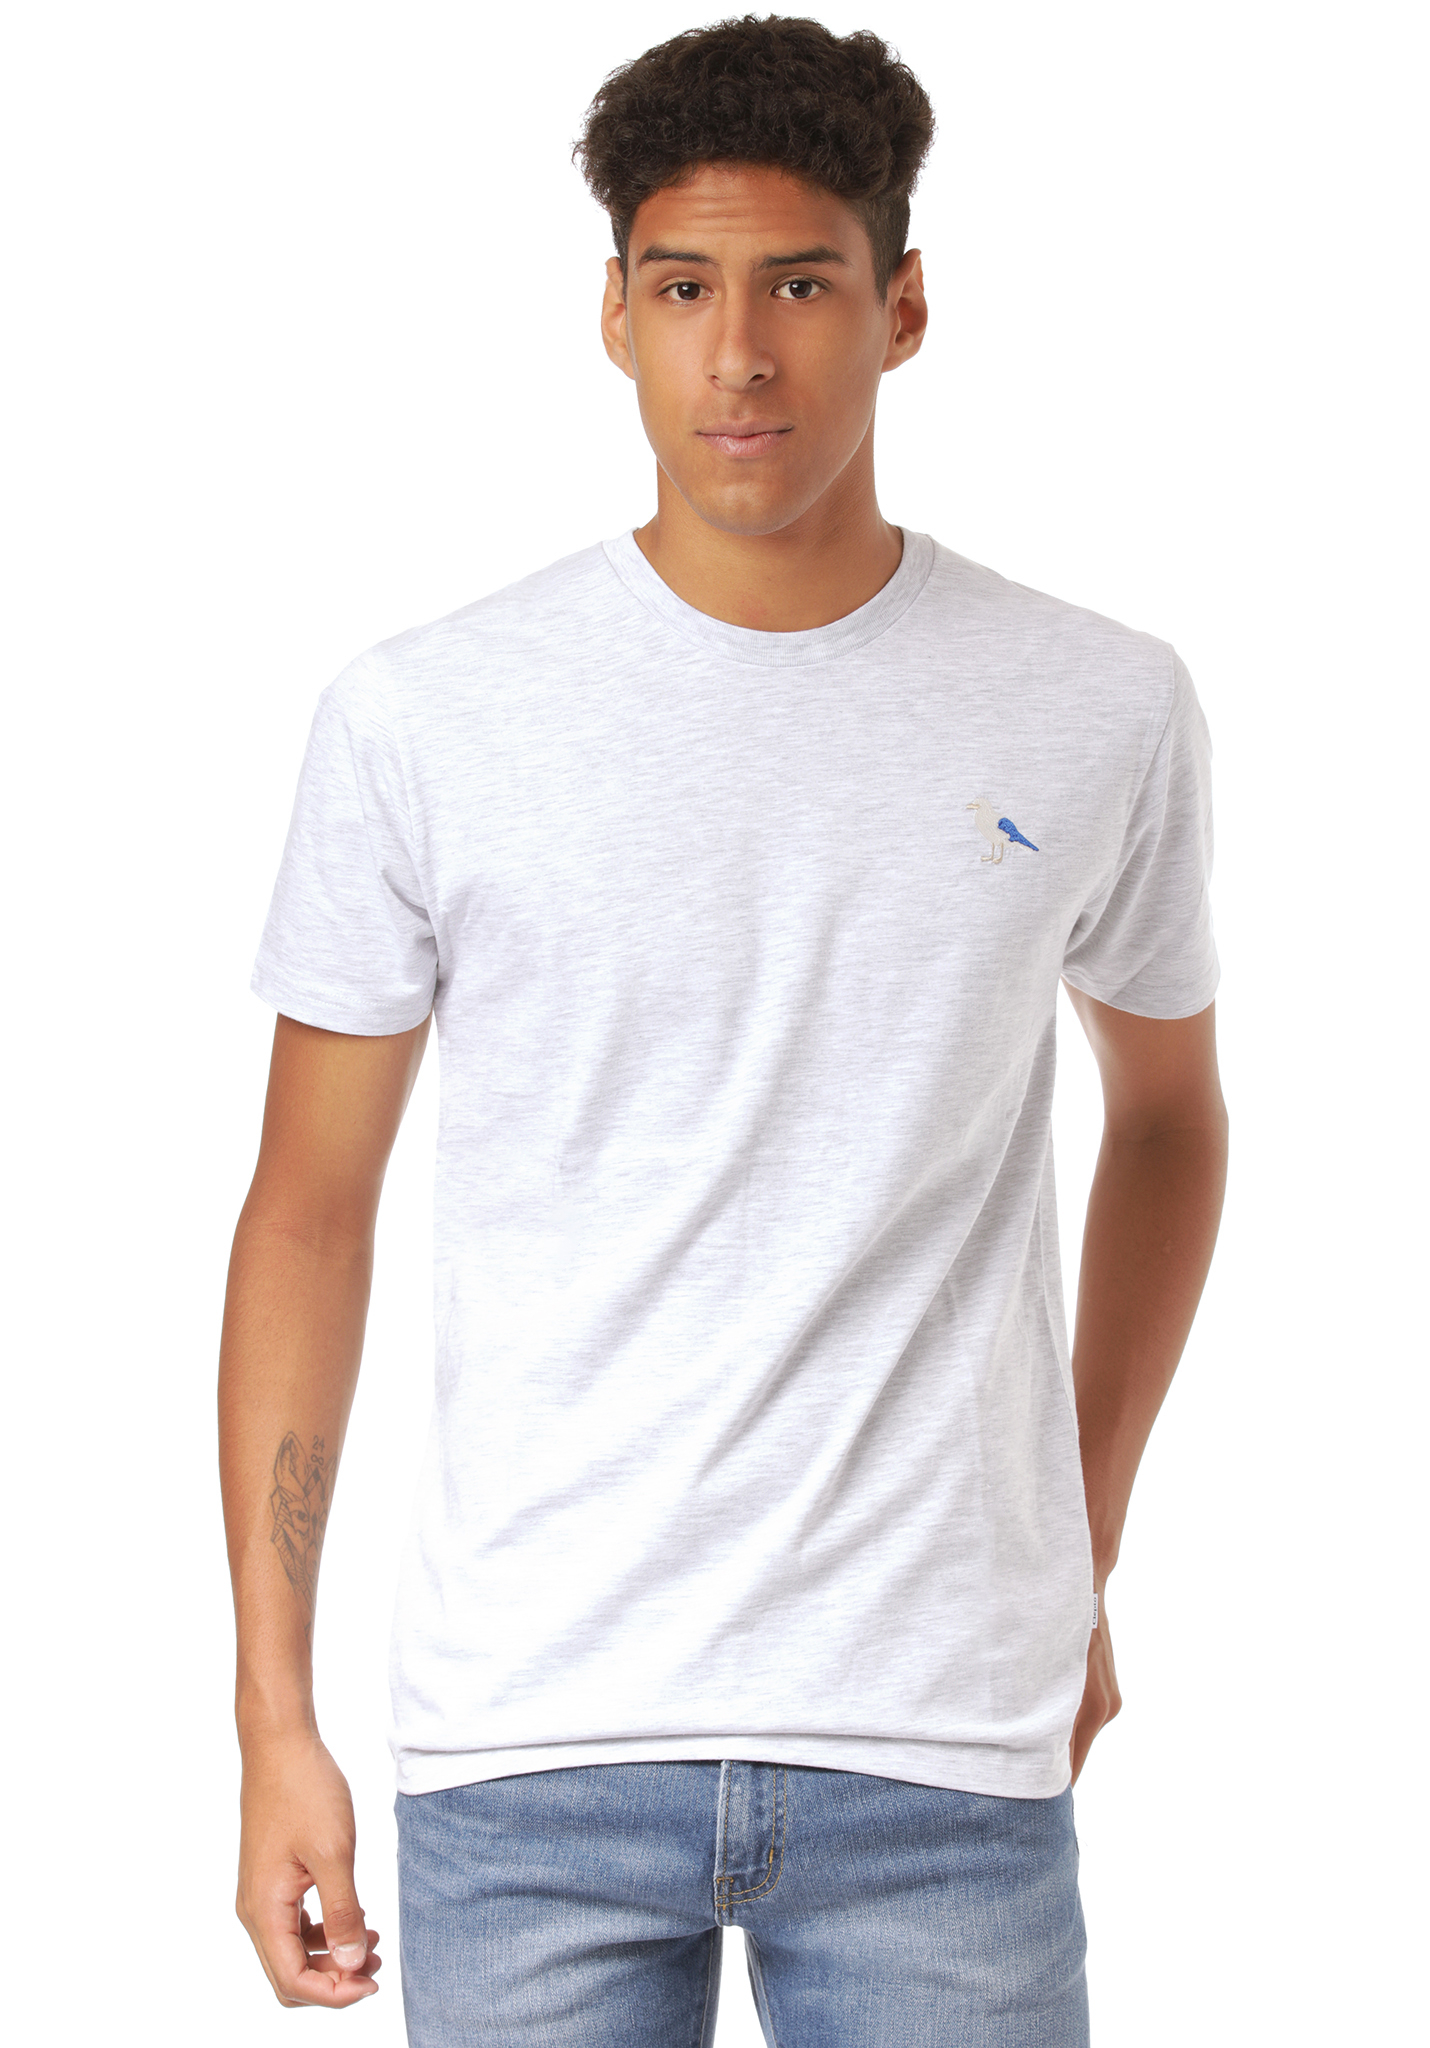 Cleptomanicx Embro Gull  T-Shirt light heather grey XXL